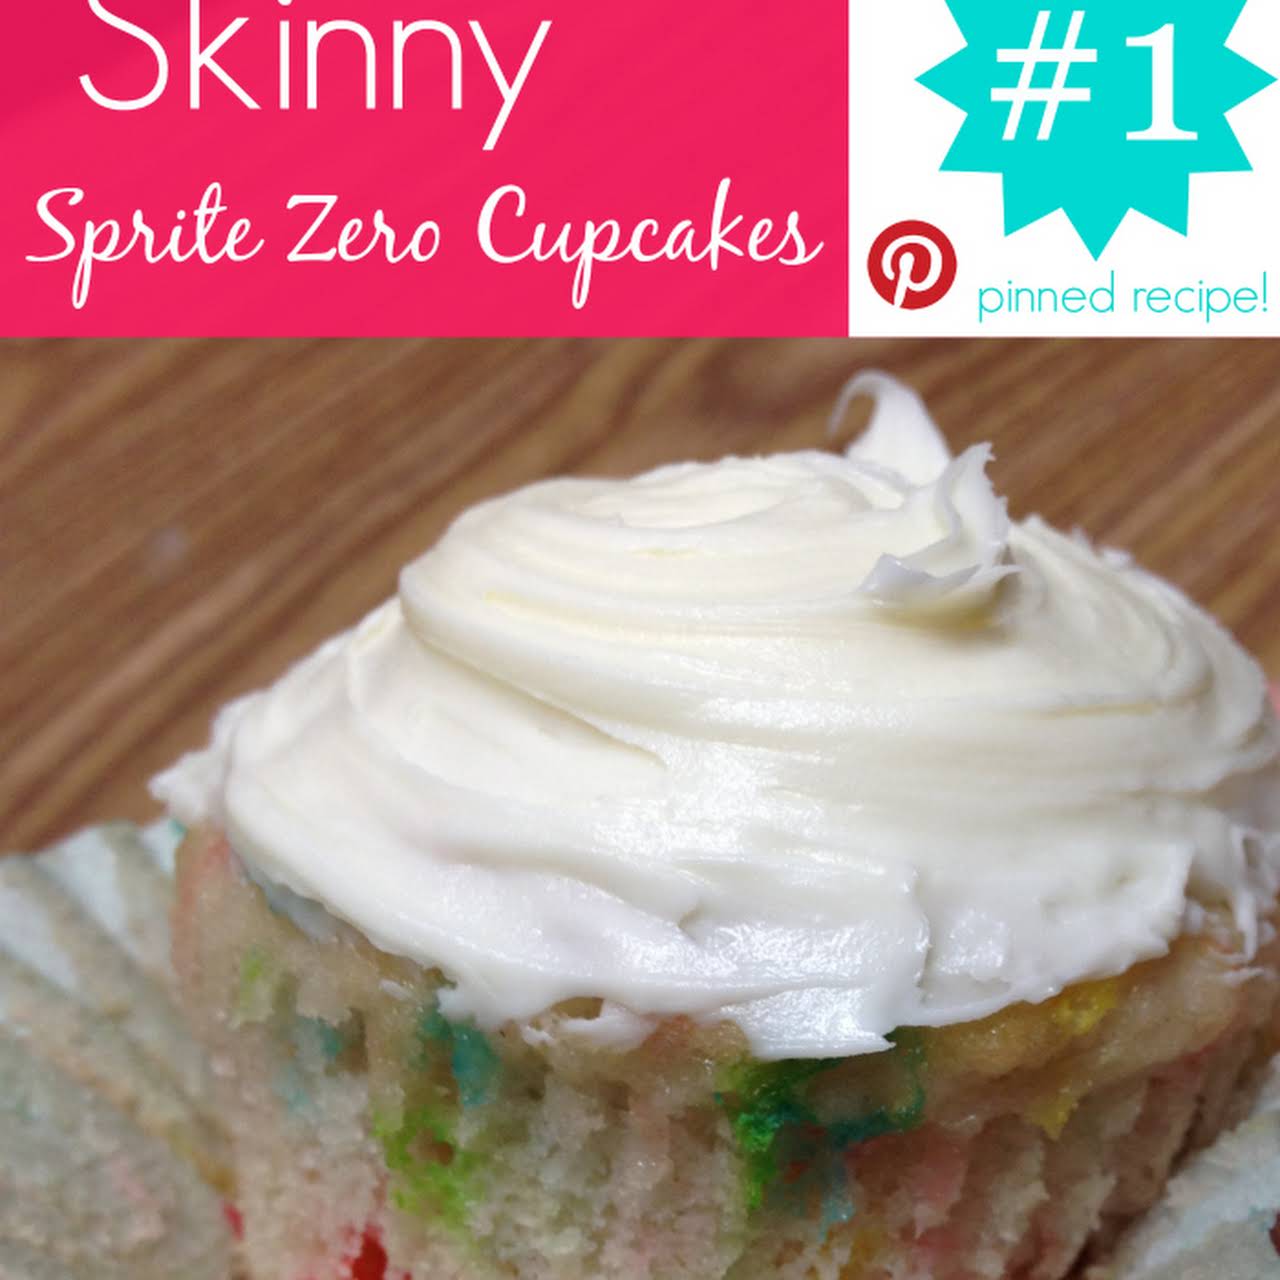 Skinny Sprite Zero Cupcakes